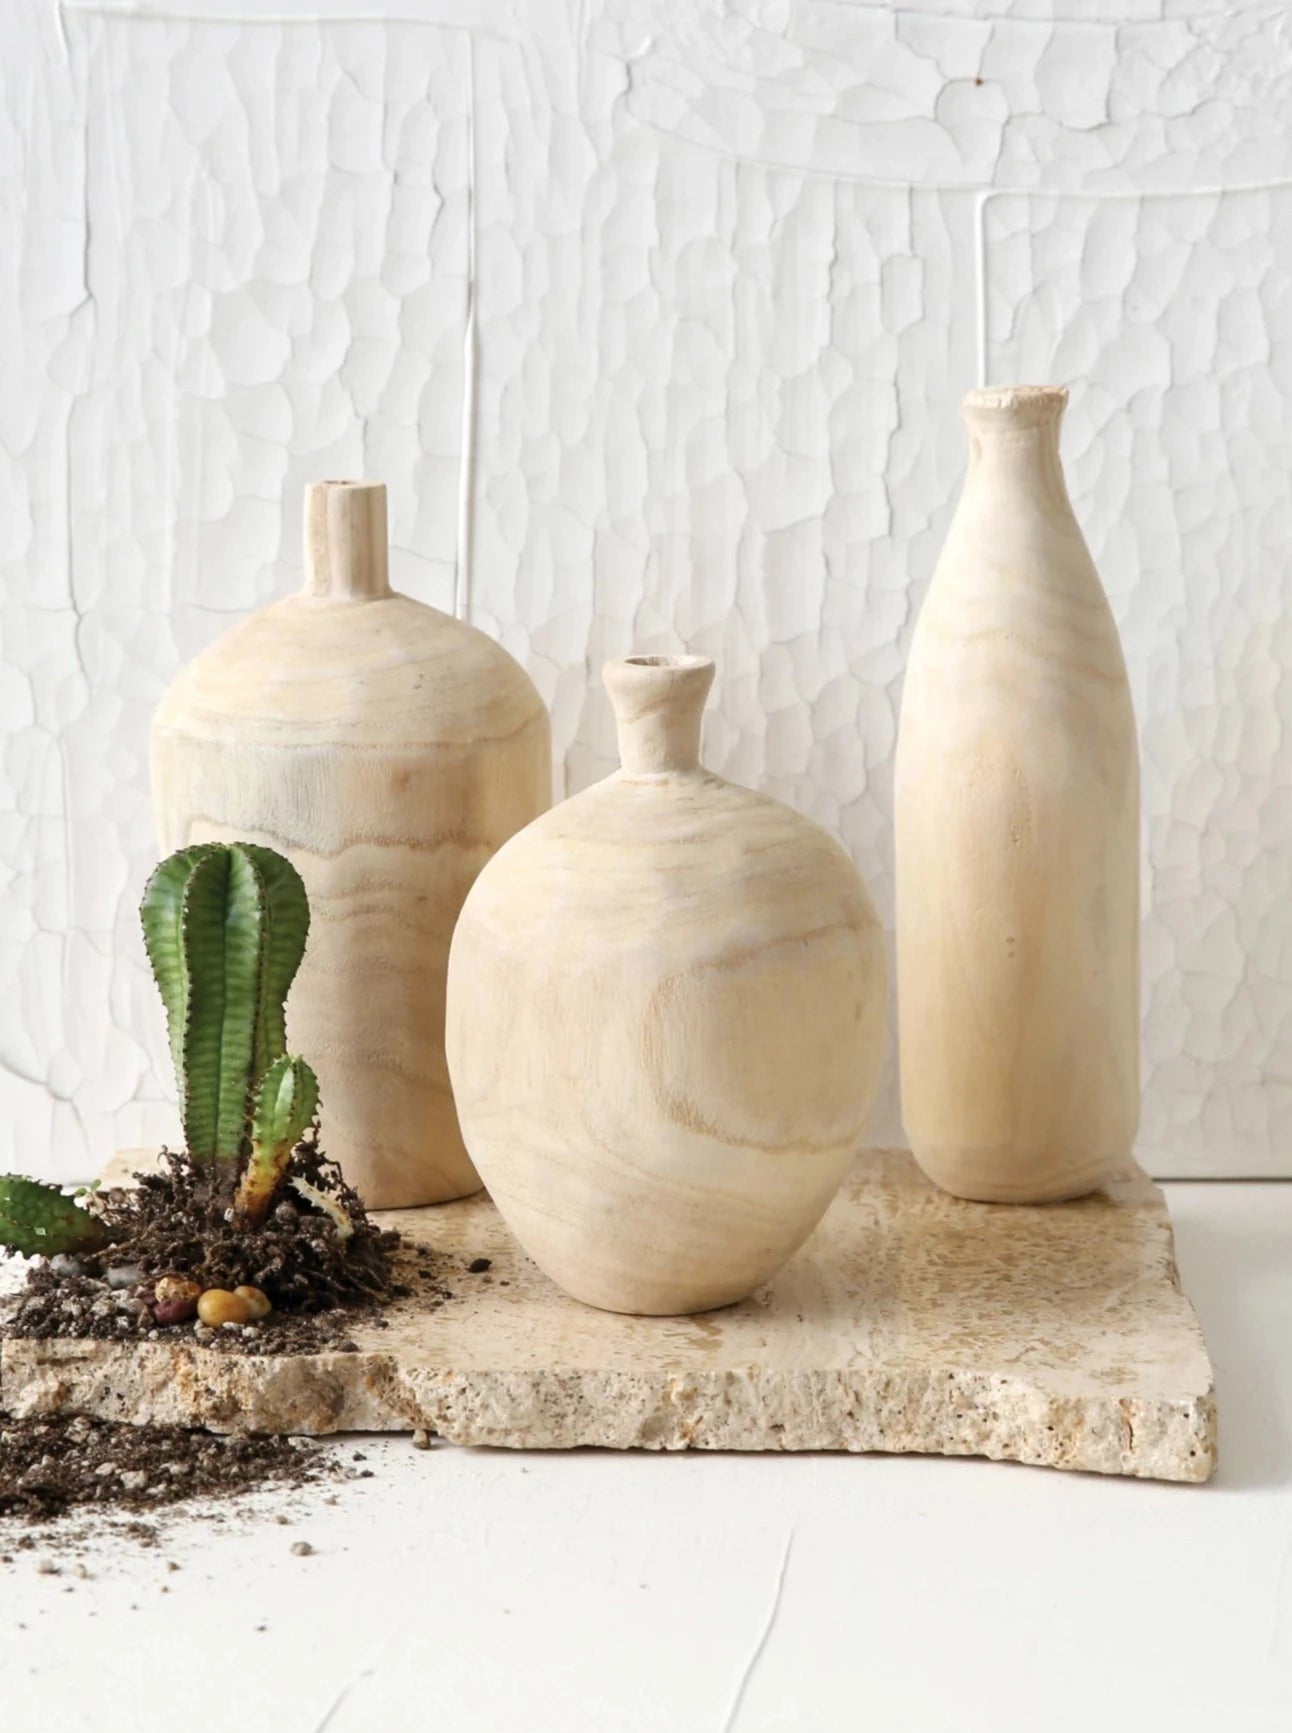 paulownia wood vase